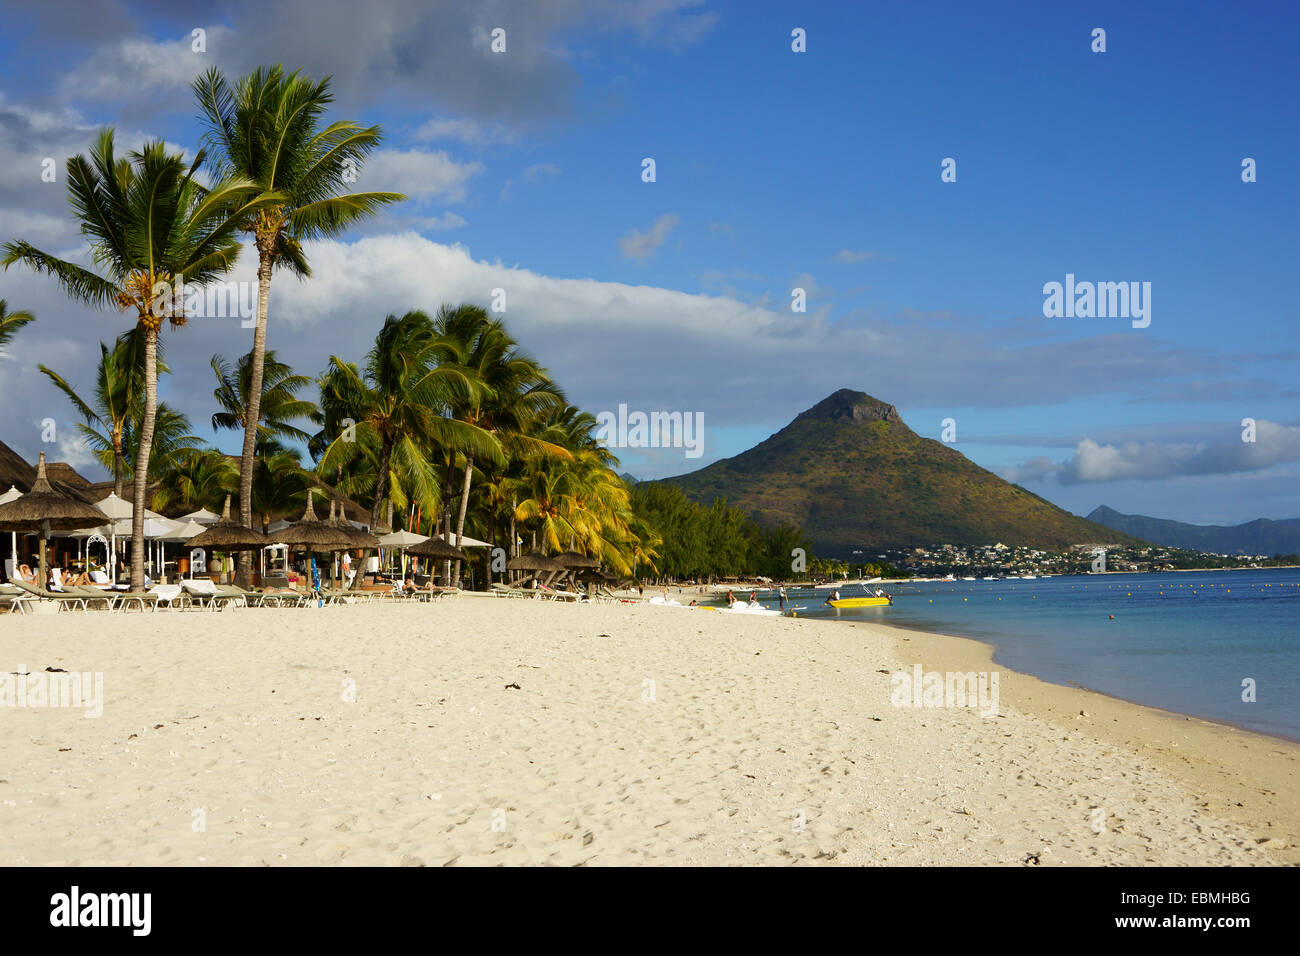 Tamarin Bay and beach, Island Mauritius Stock Photo